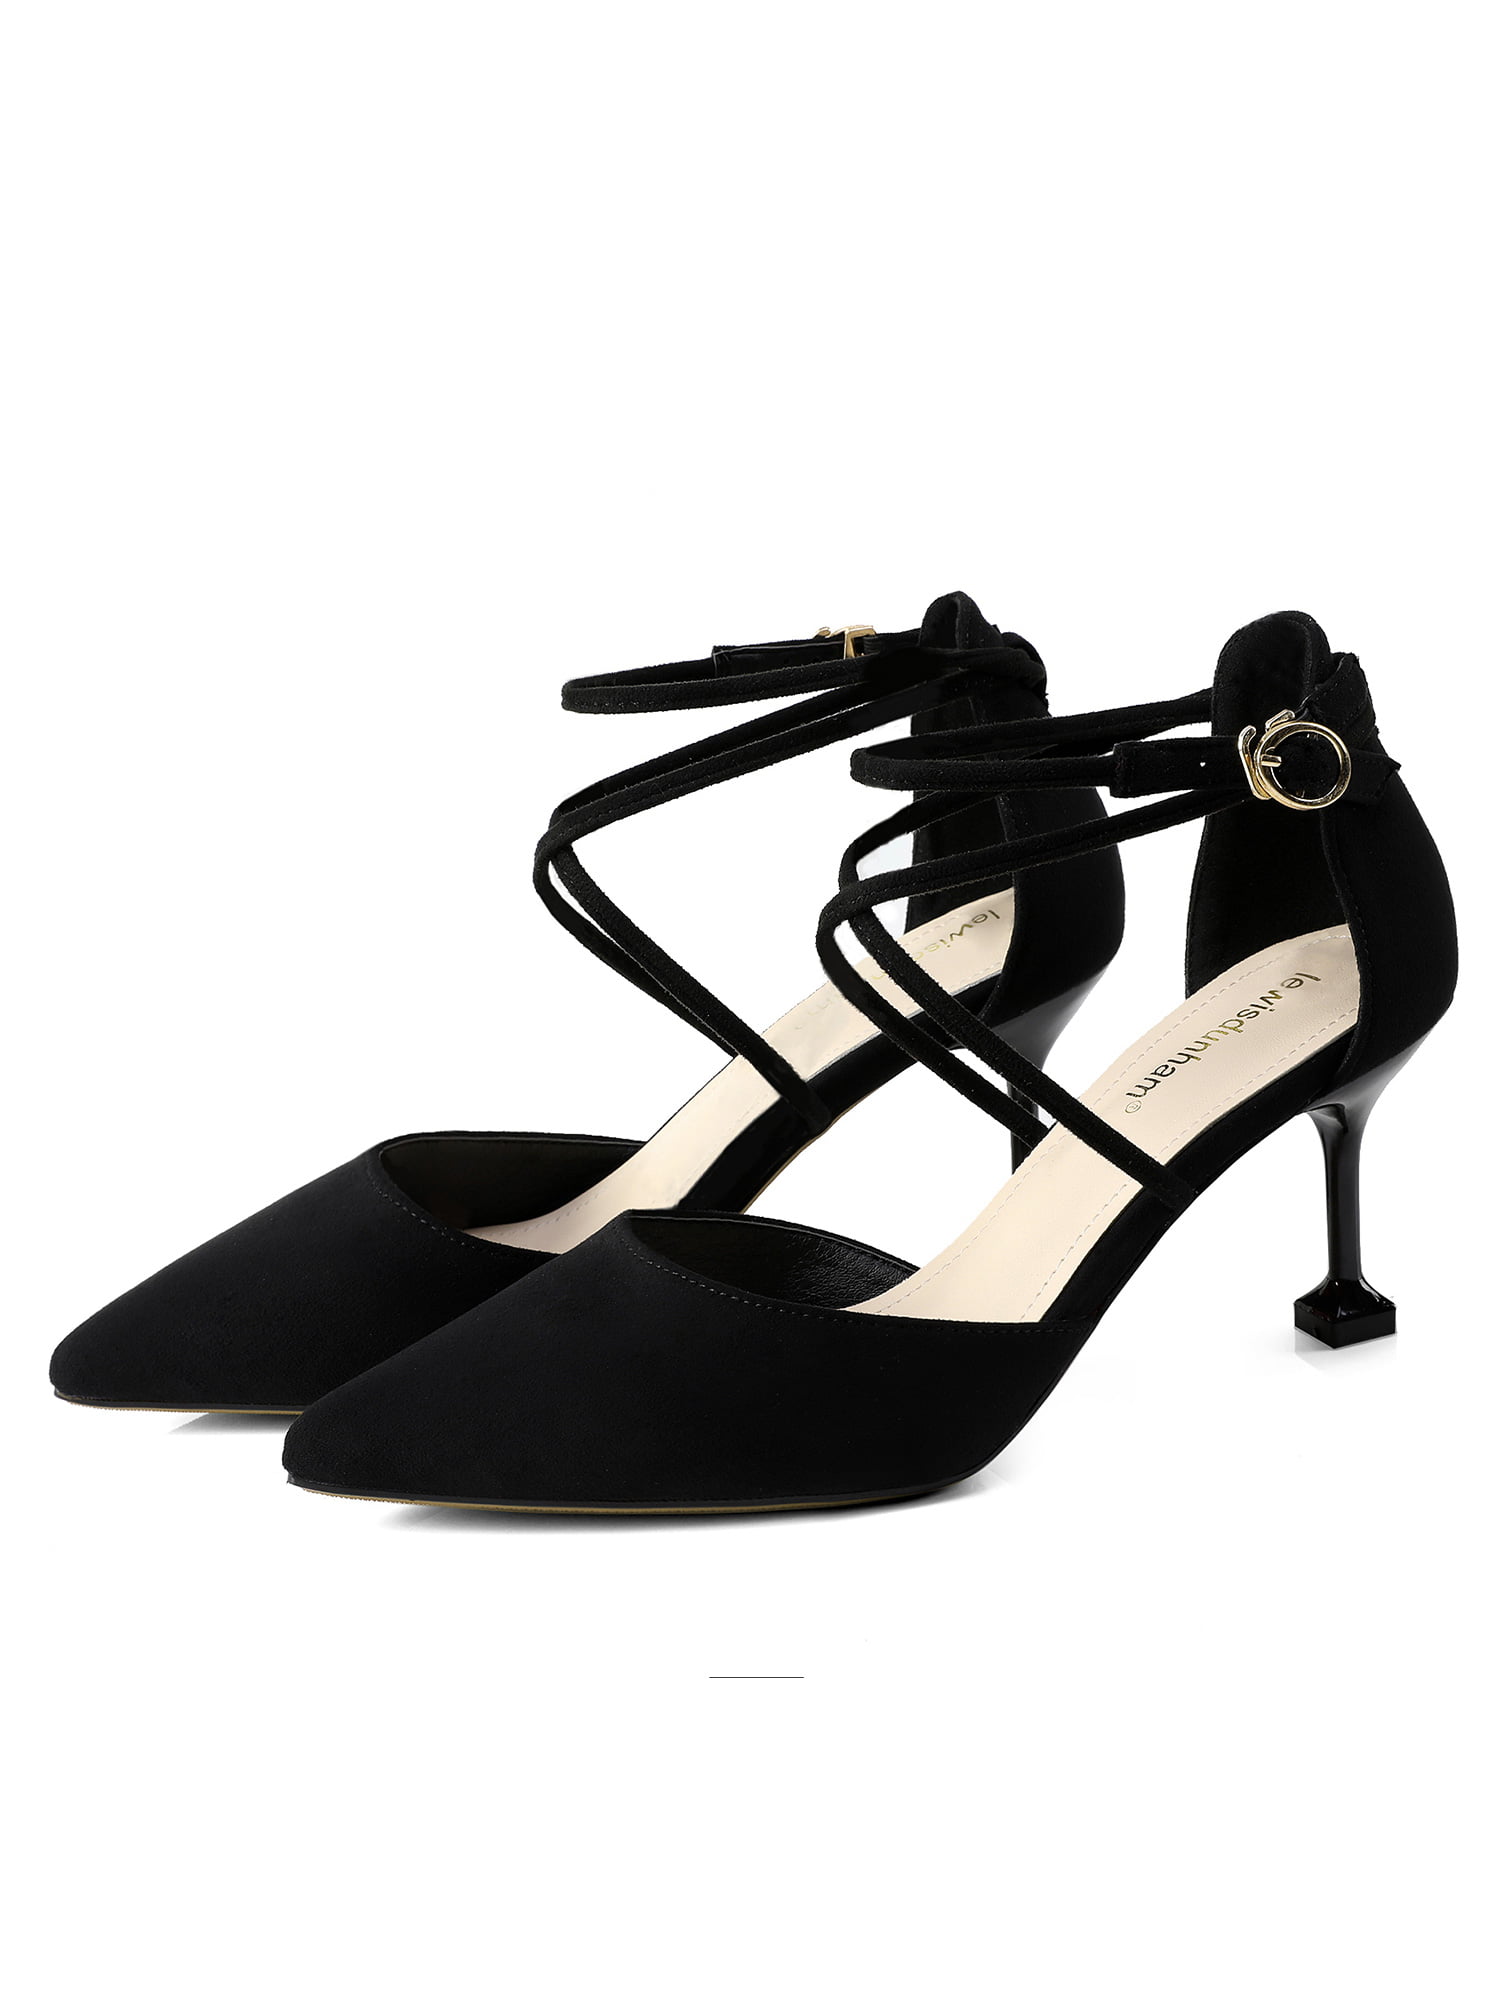 Women Ankle Strap Sandals Ladies Platform Wedge High Heels Stiletto Pump Shoes